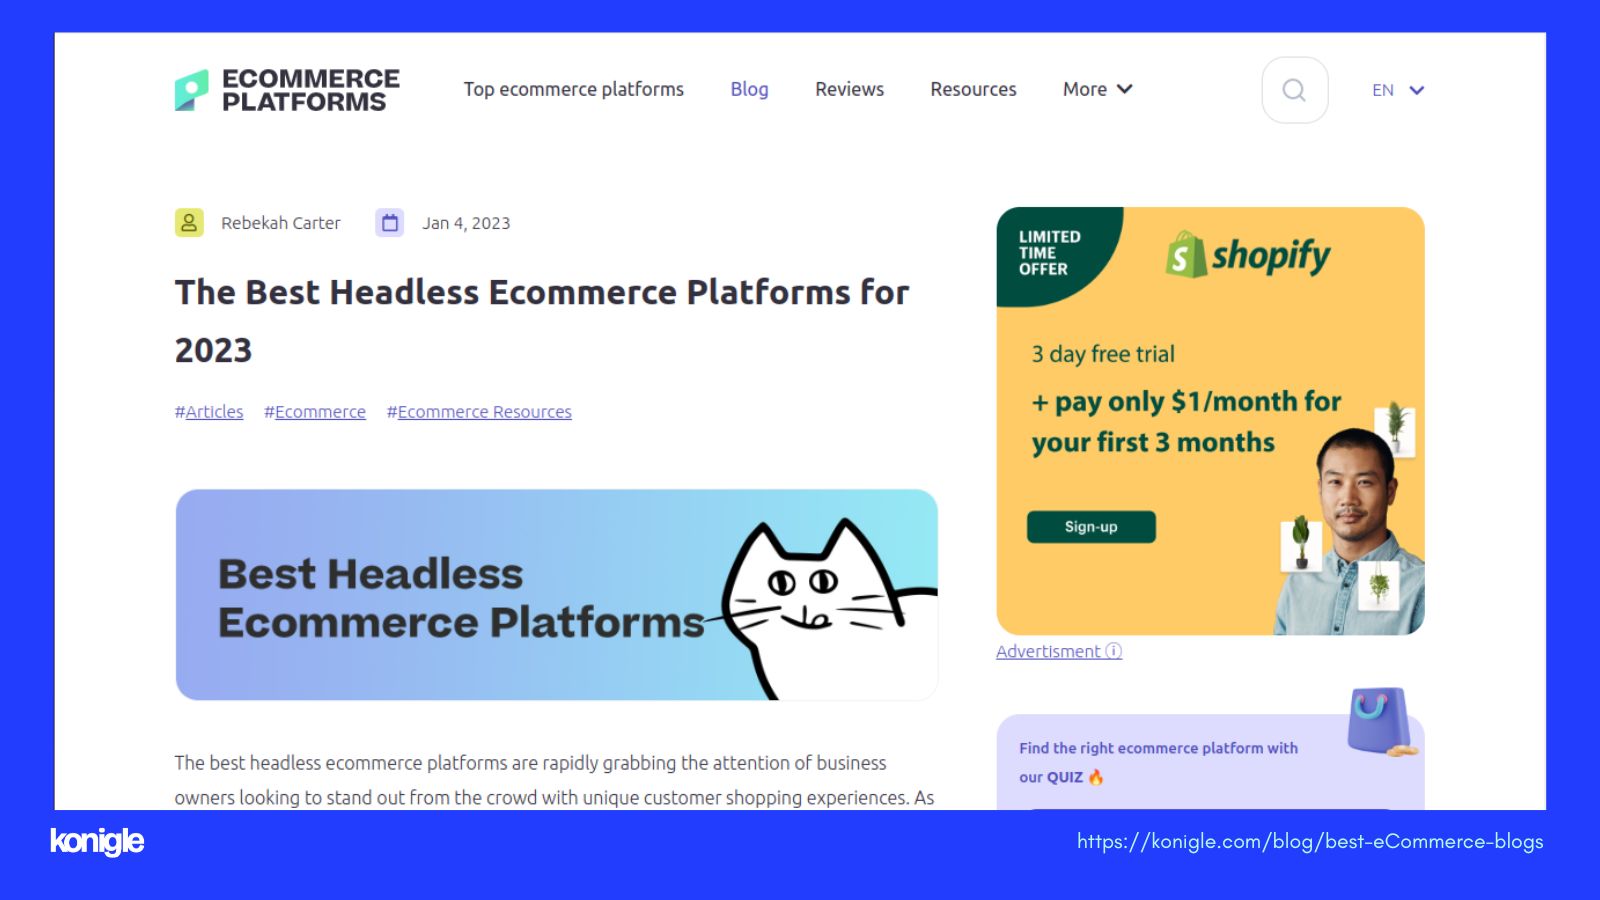 eCommerce Platforms&nbsp;blog